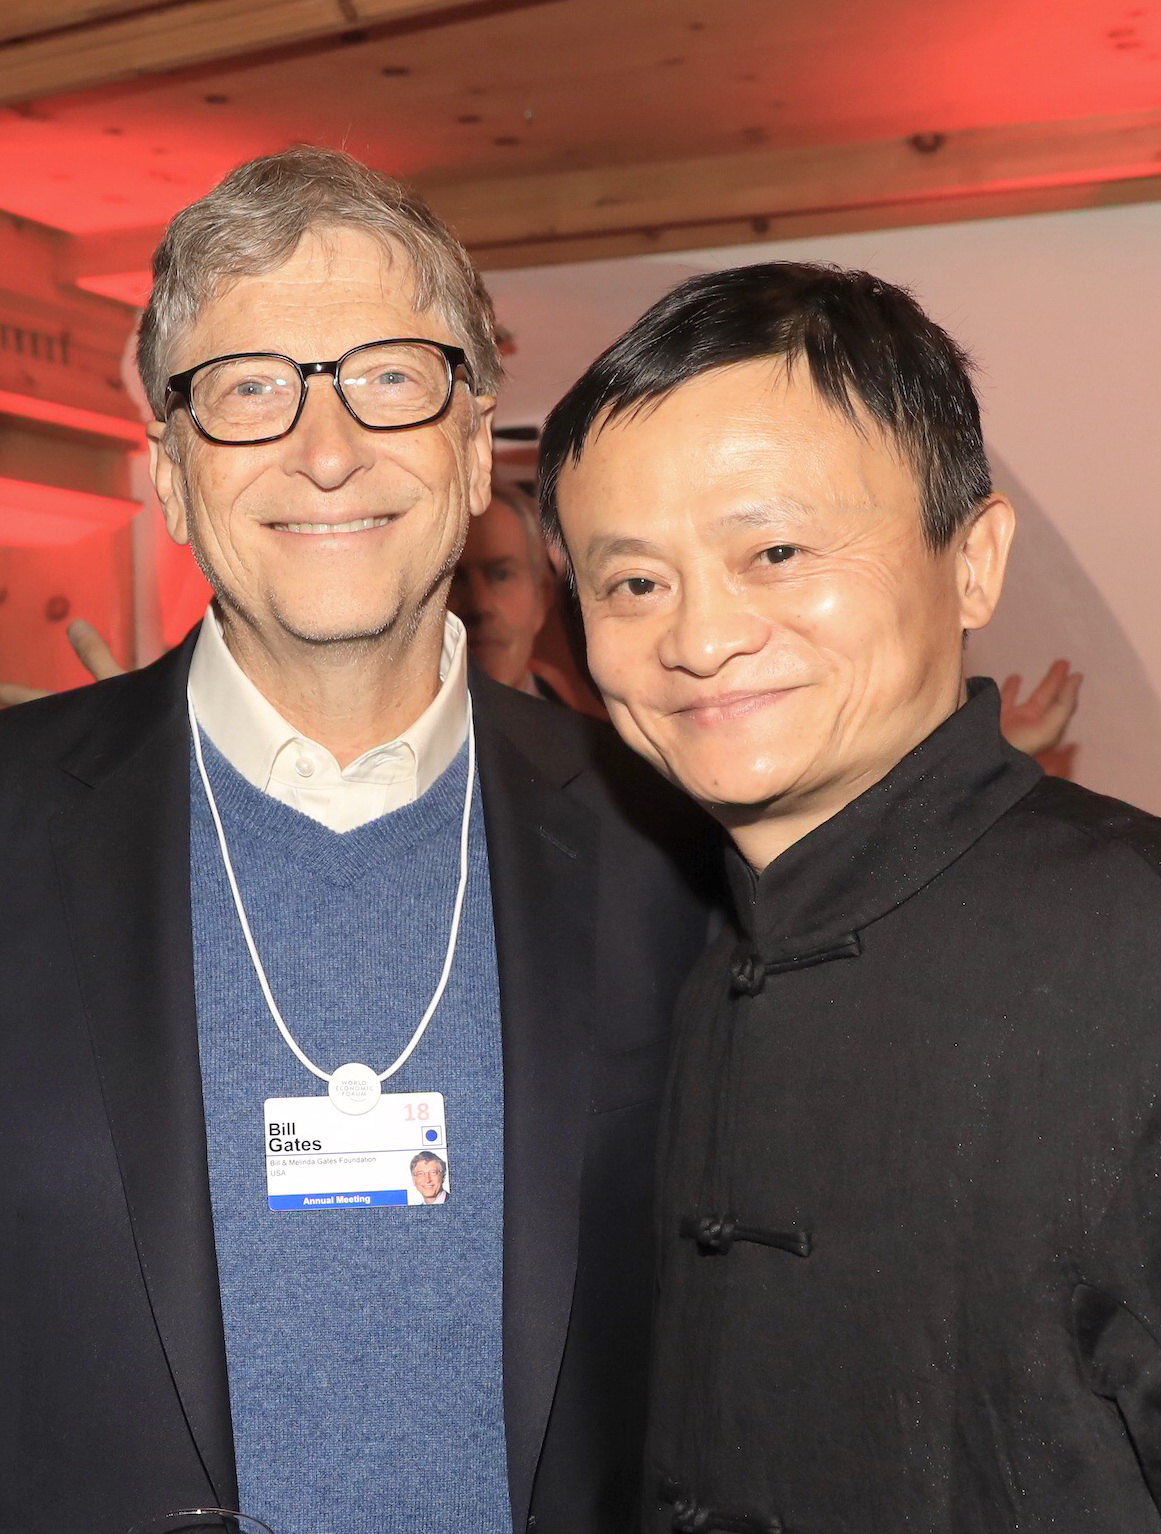 Gates sees productive future for Jack Ma's generosity